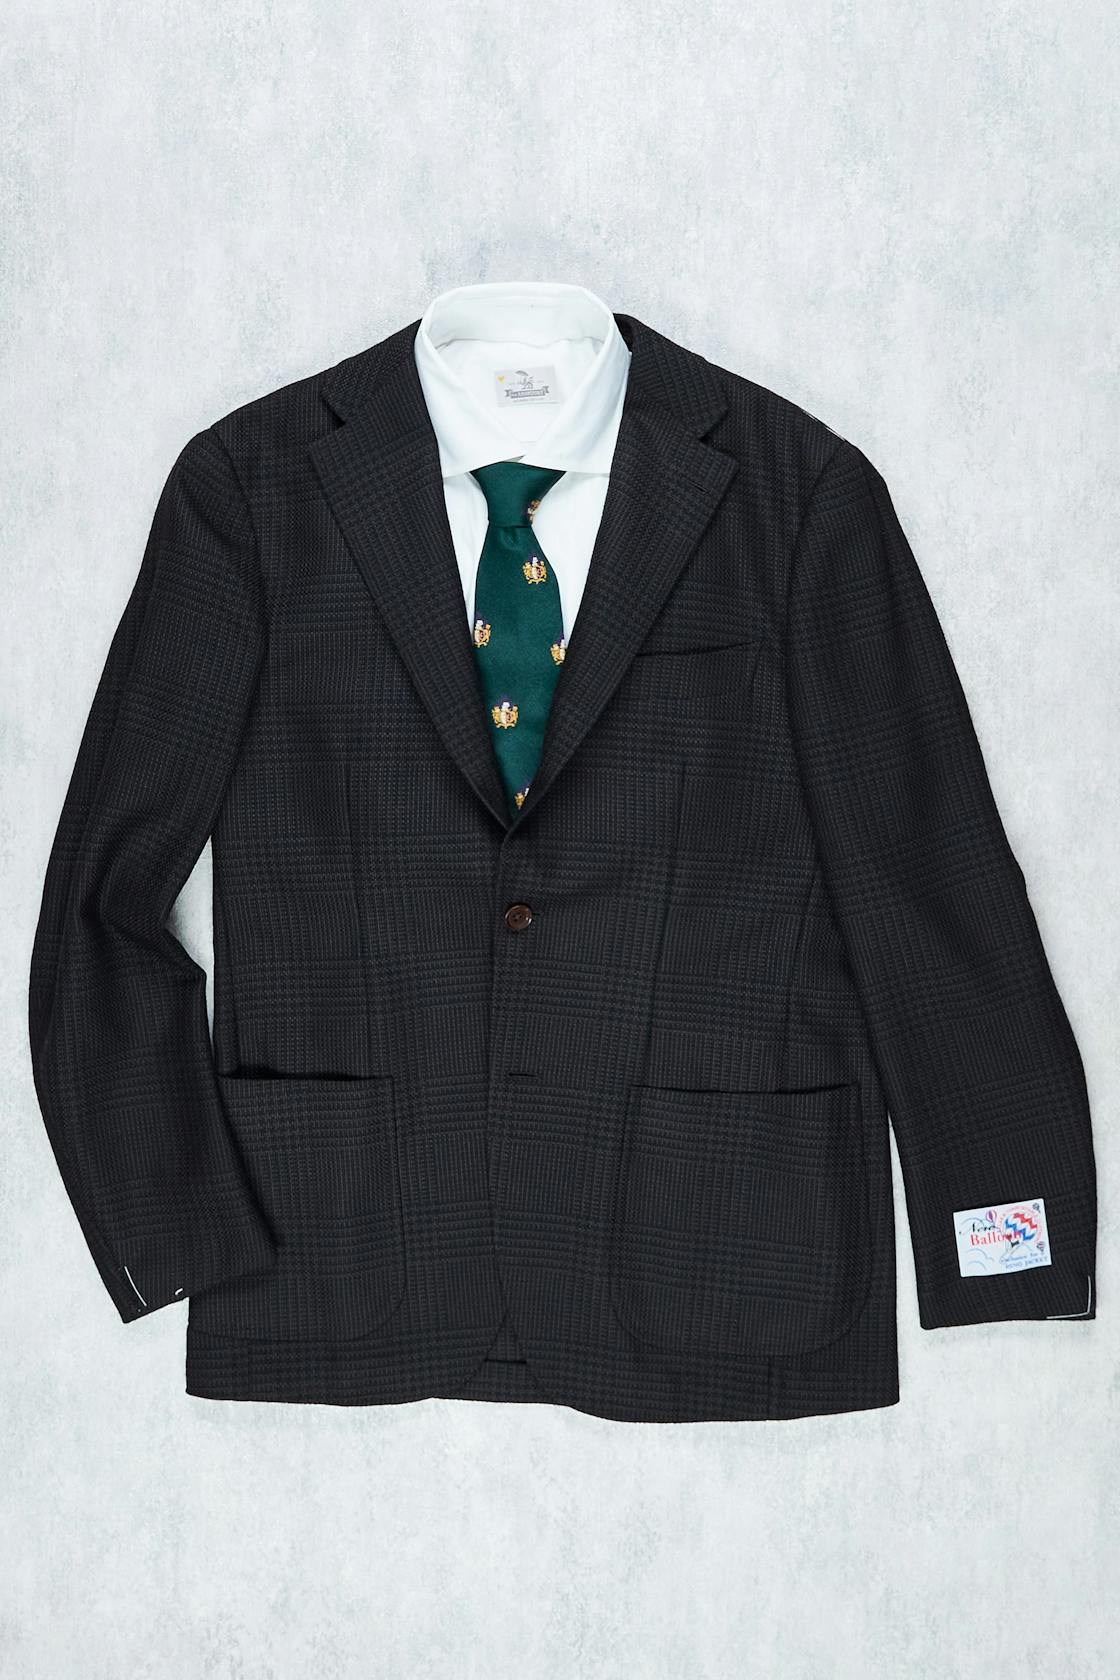 Ring Jacket 280 Brown Black Prince of Wales Check Wool Sport Coat